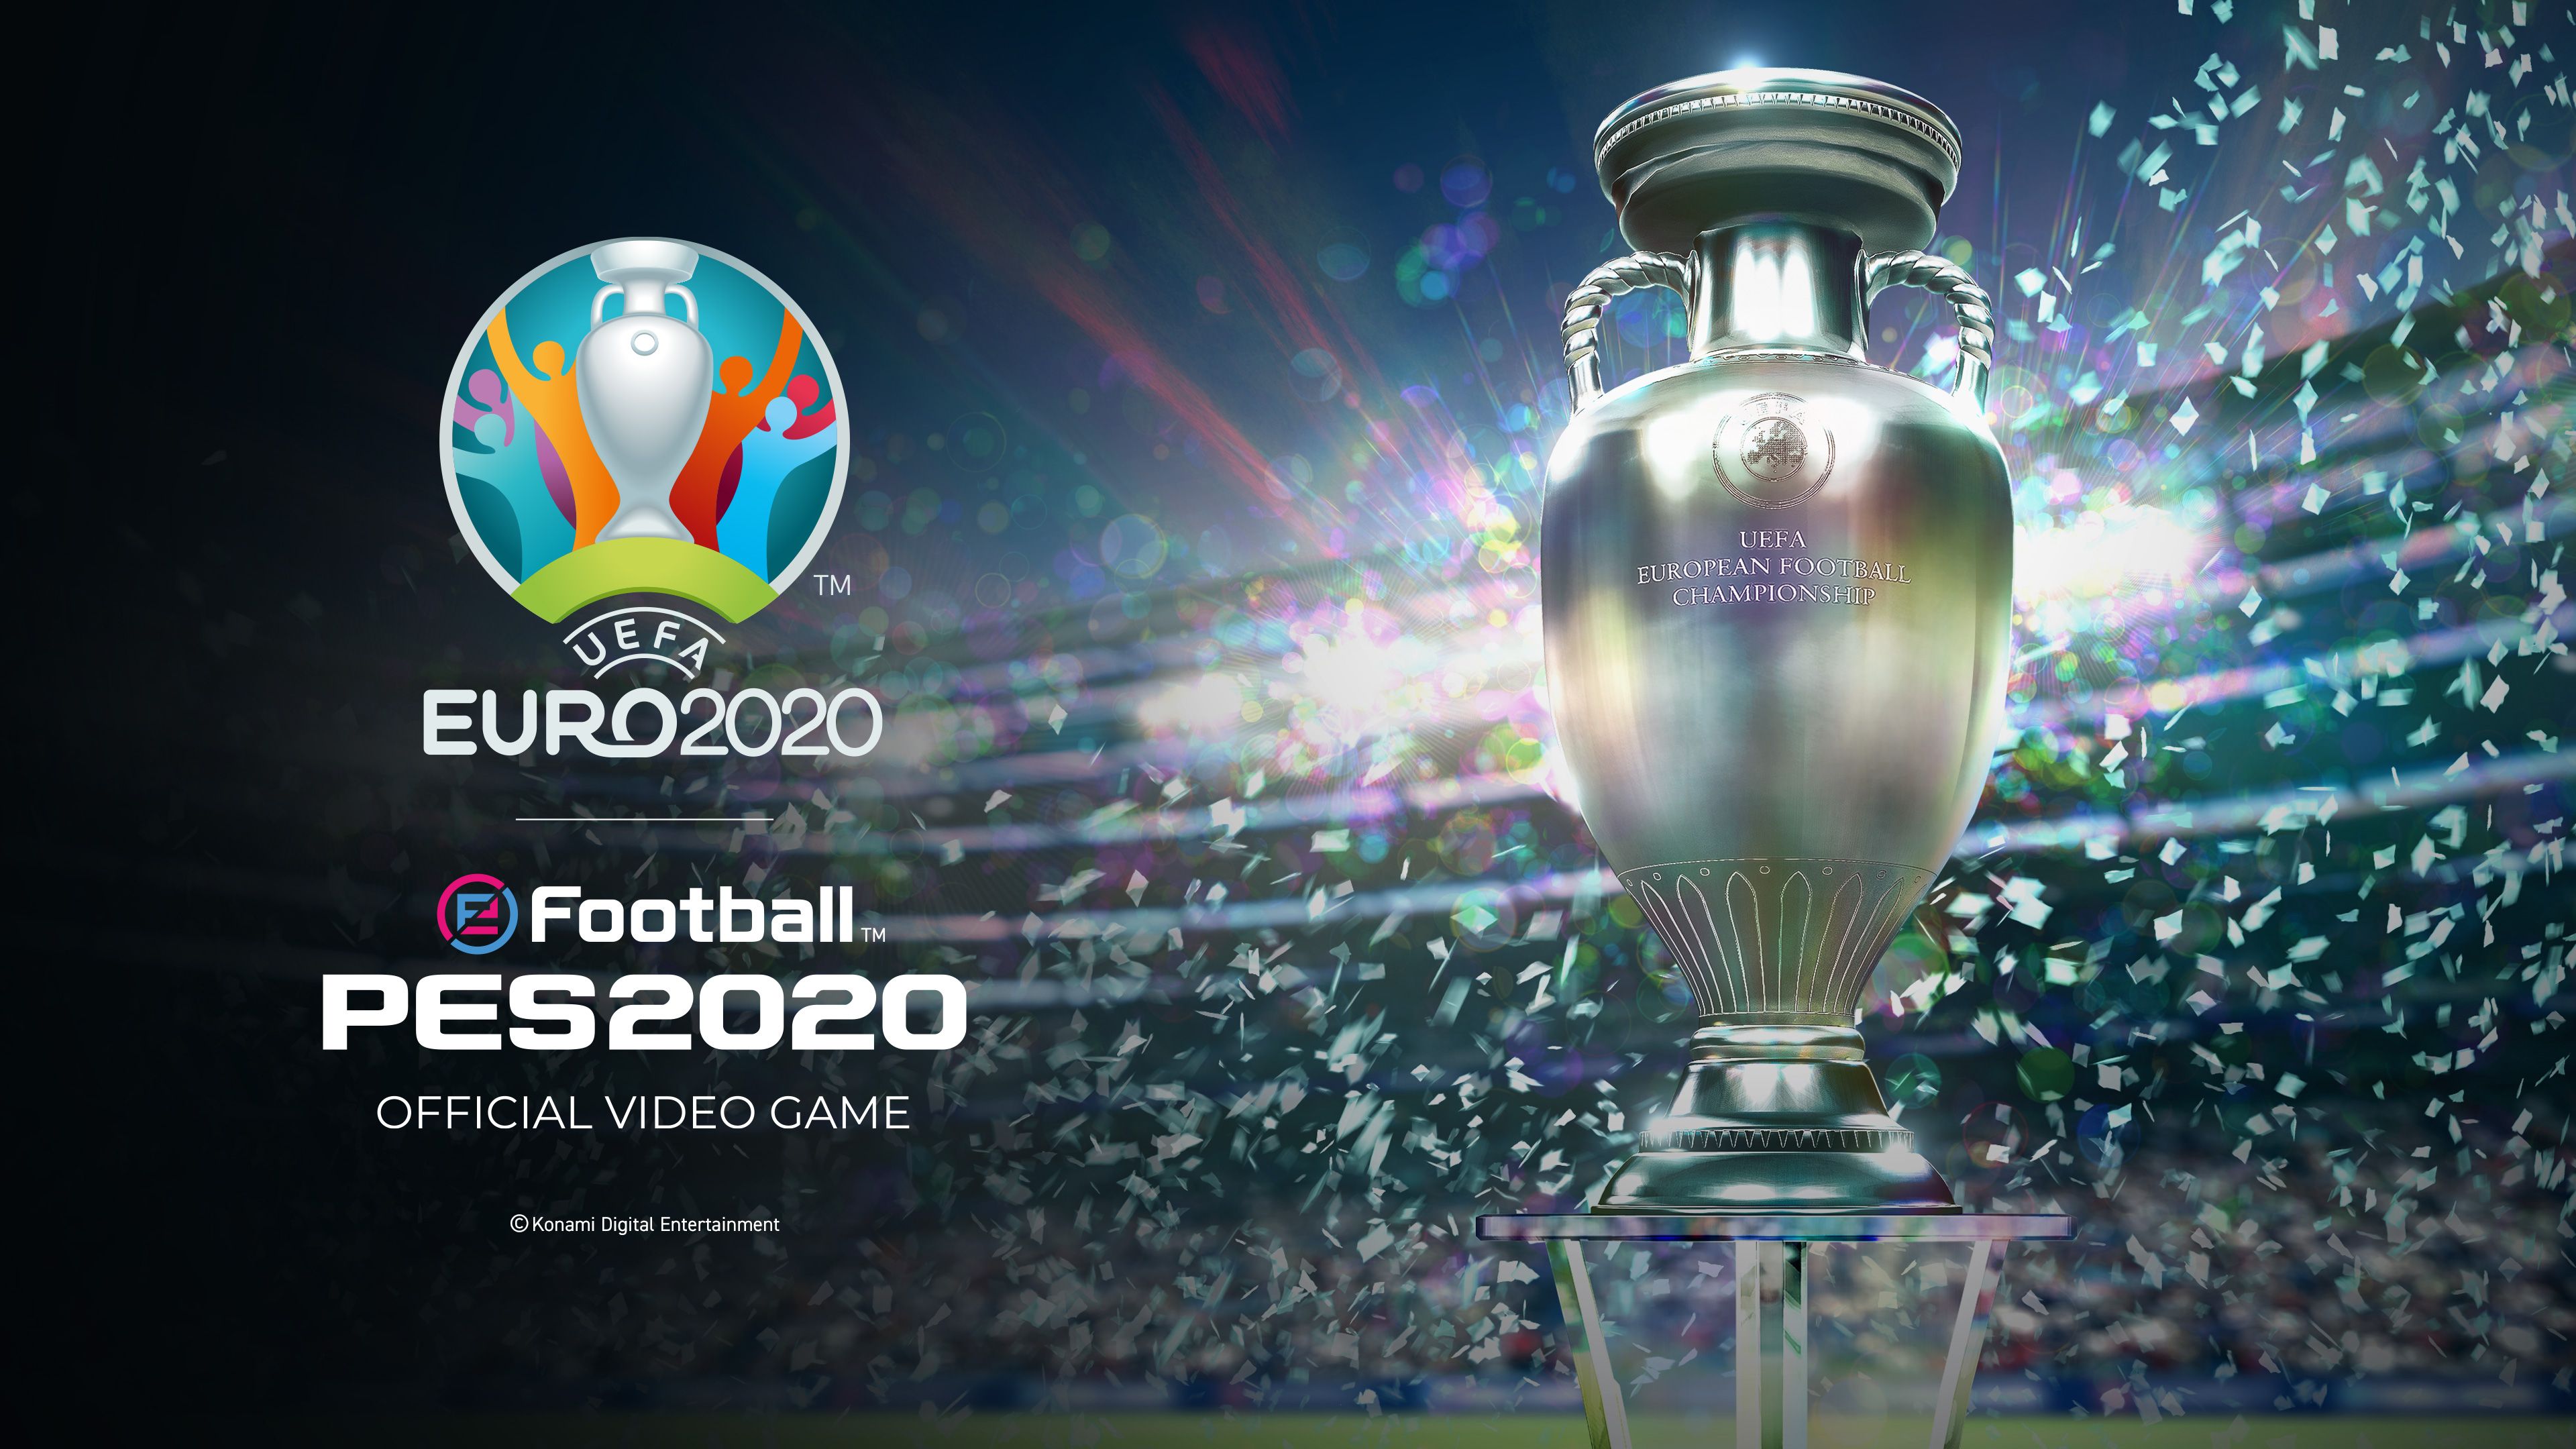 UEFA EURO 2020™ UPDATE FOR eFootball PES 2020 TO BE RELEASED ON JUNE 4. KONAMI DIGITAL ENTERTAINMENT B.V